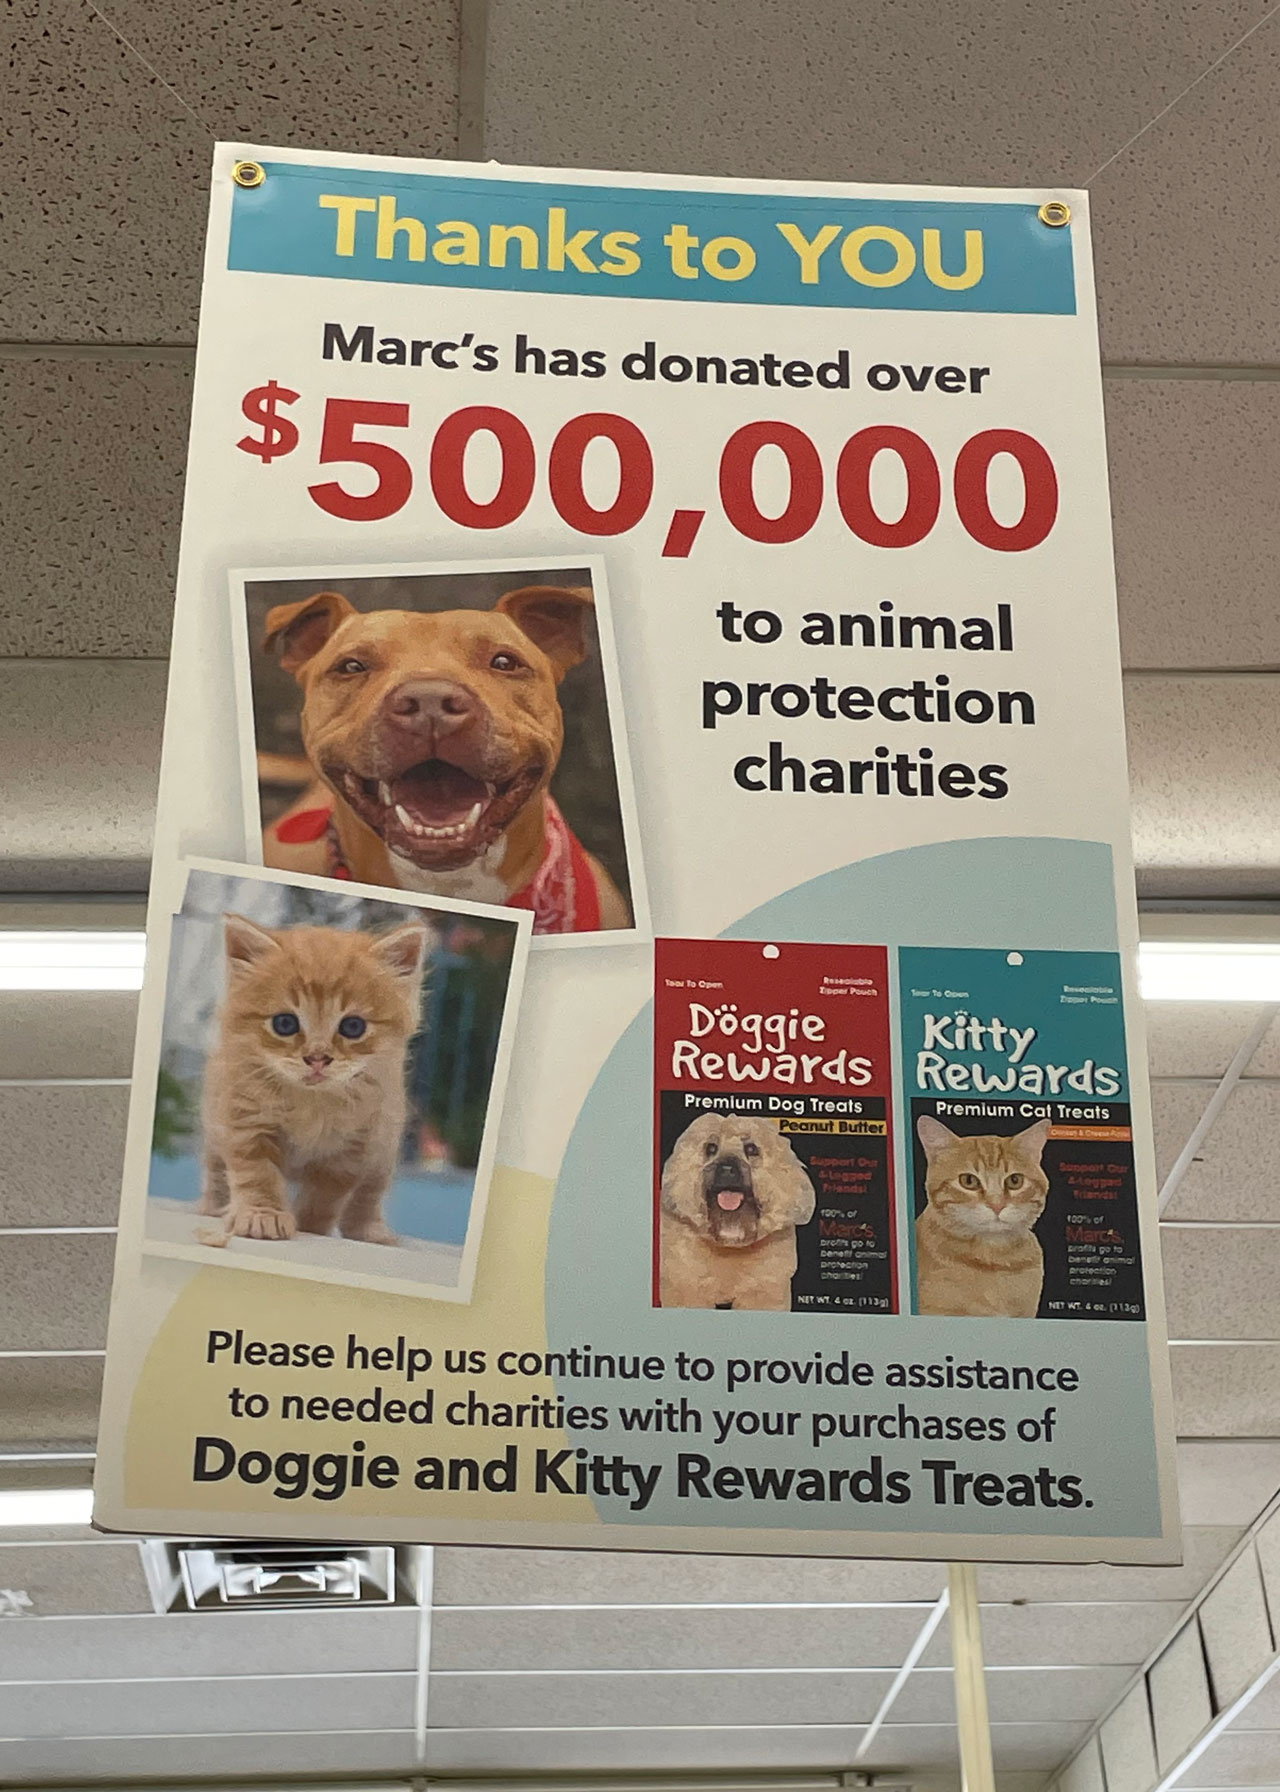 A flyer for a pet rewards program at Marc's